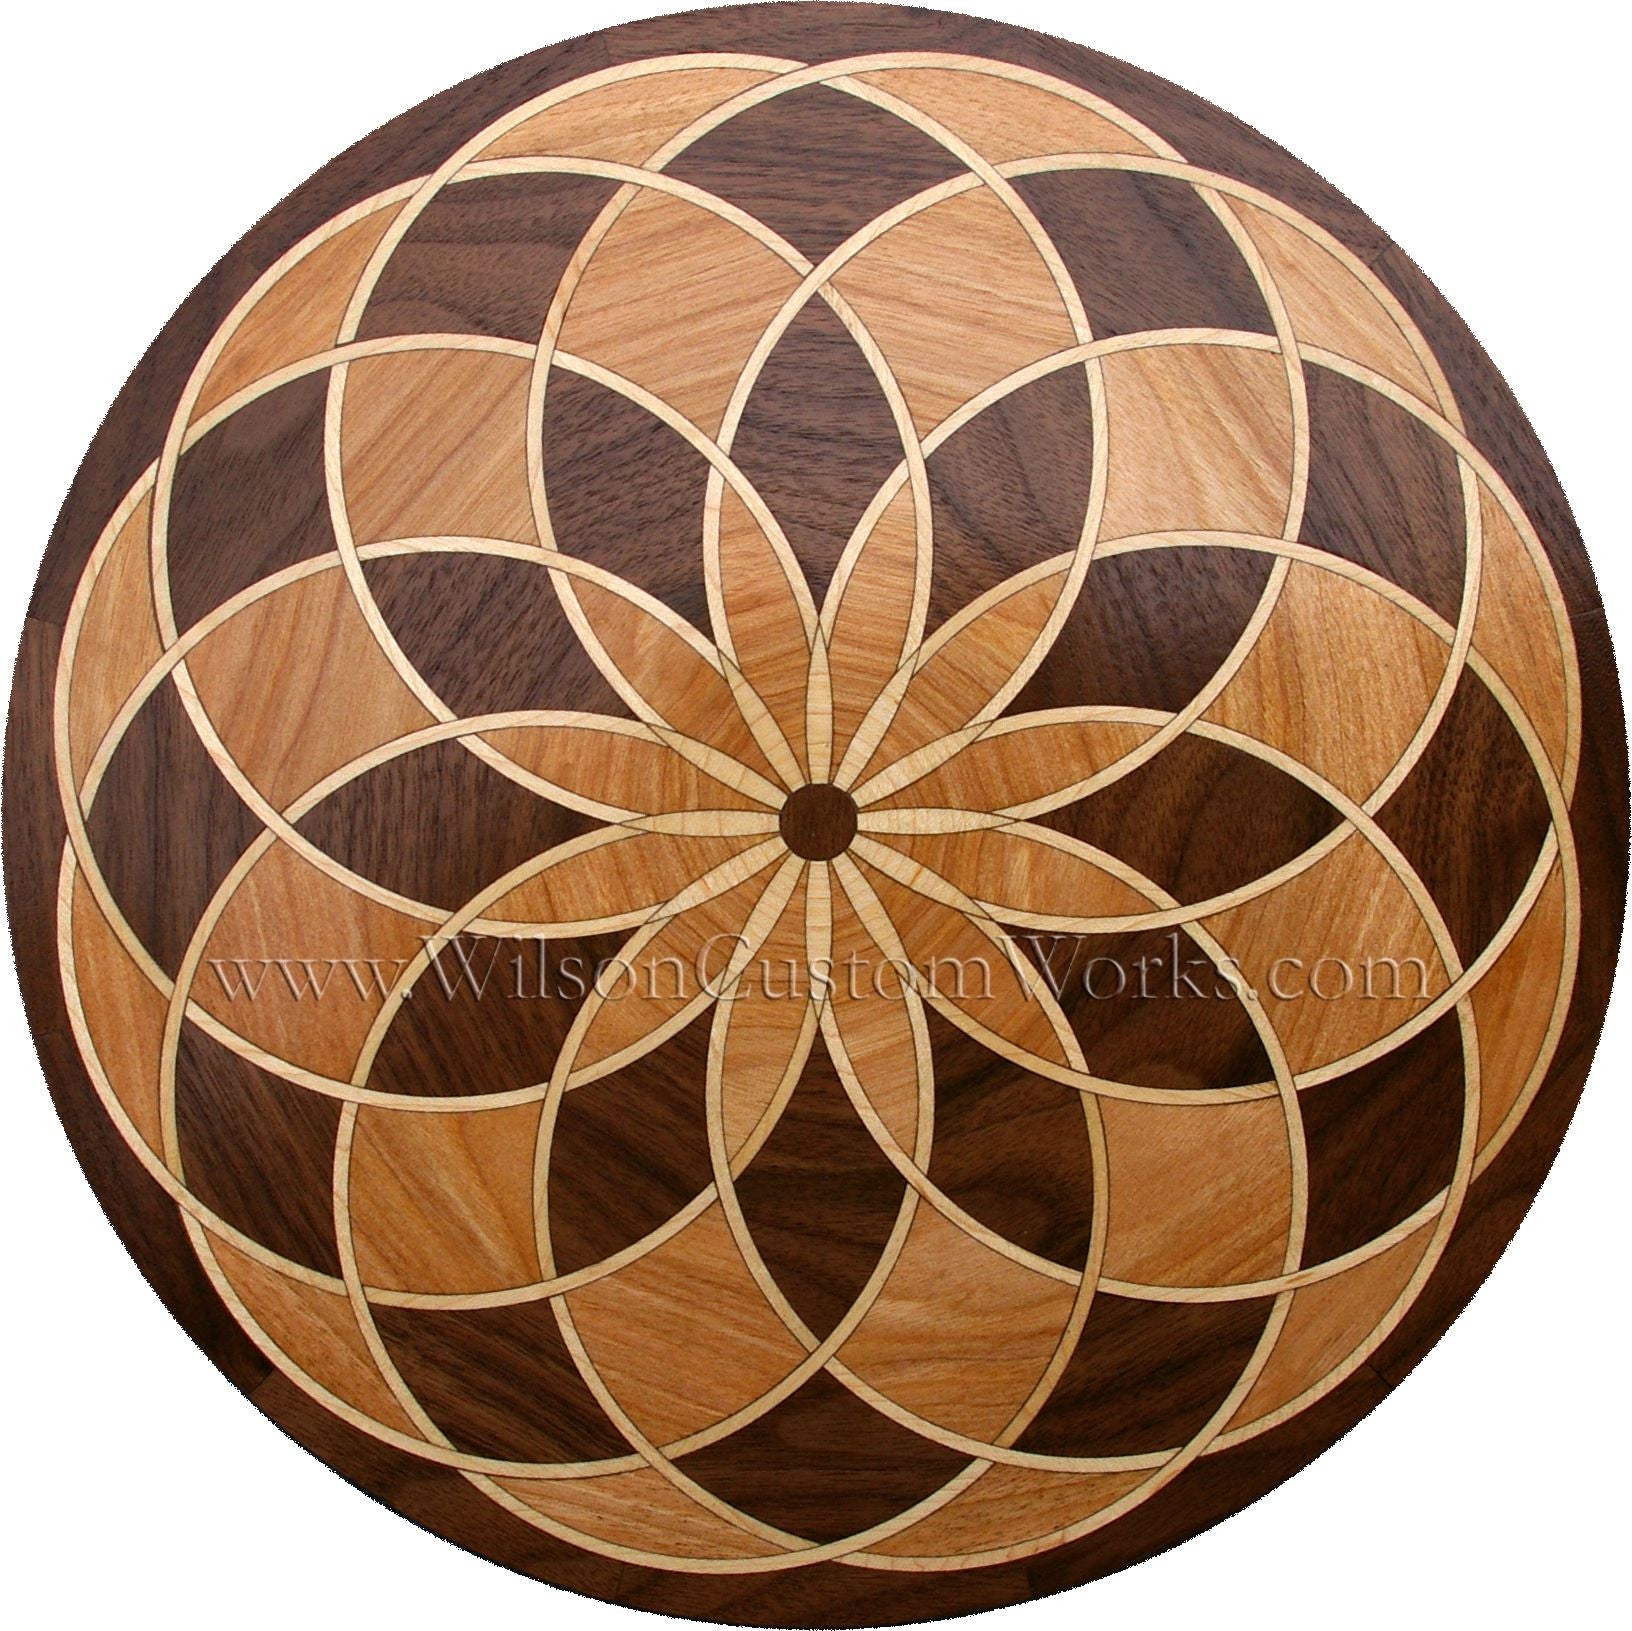 Wilson Custom Works hardwood wood floor inlay medallion spyro 3-tone modern design